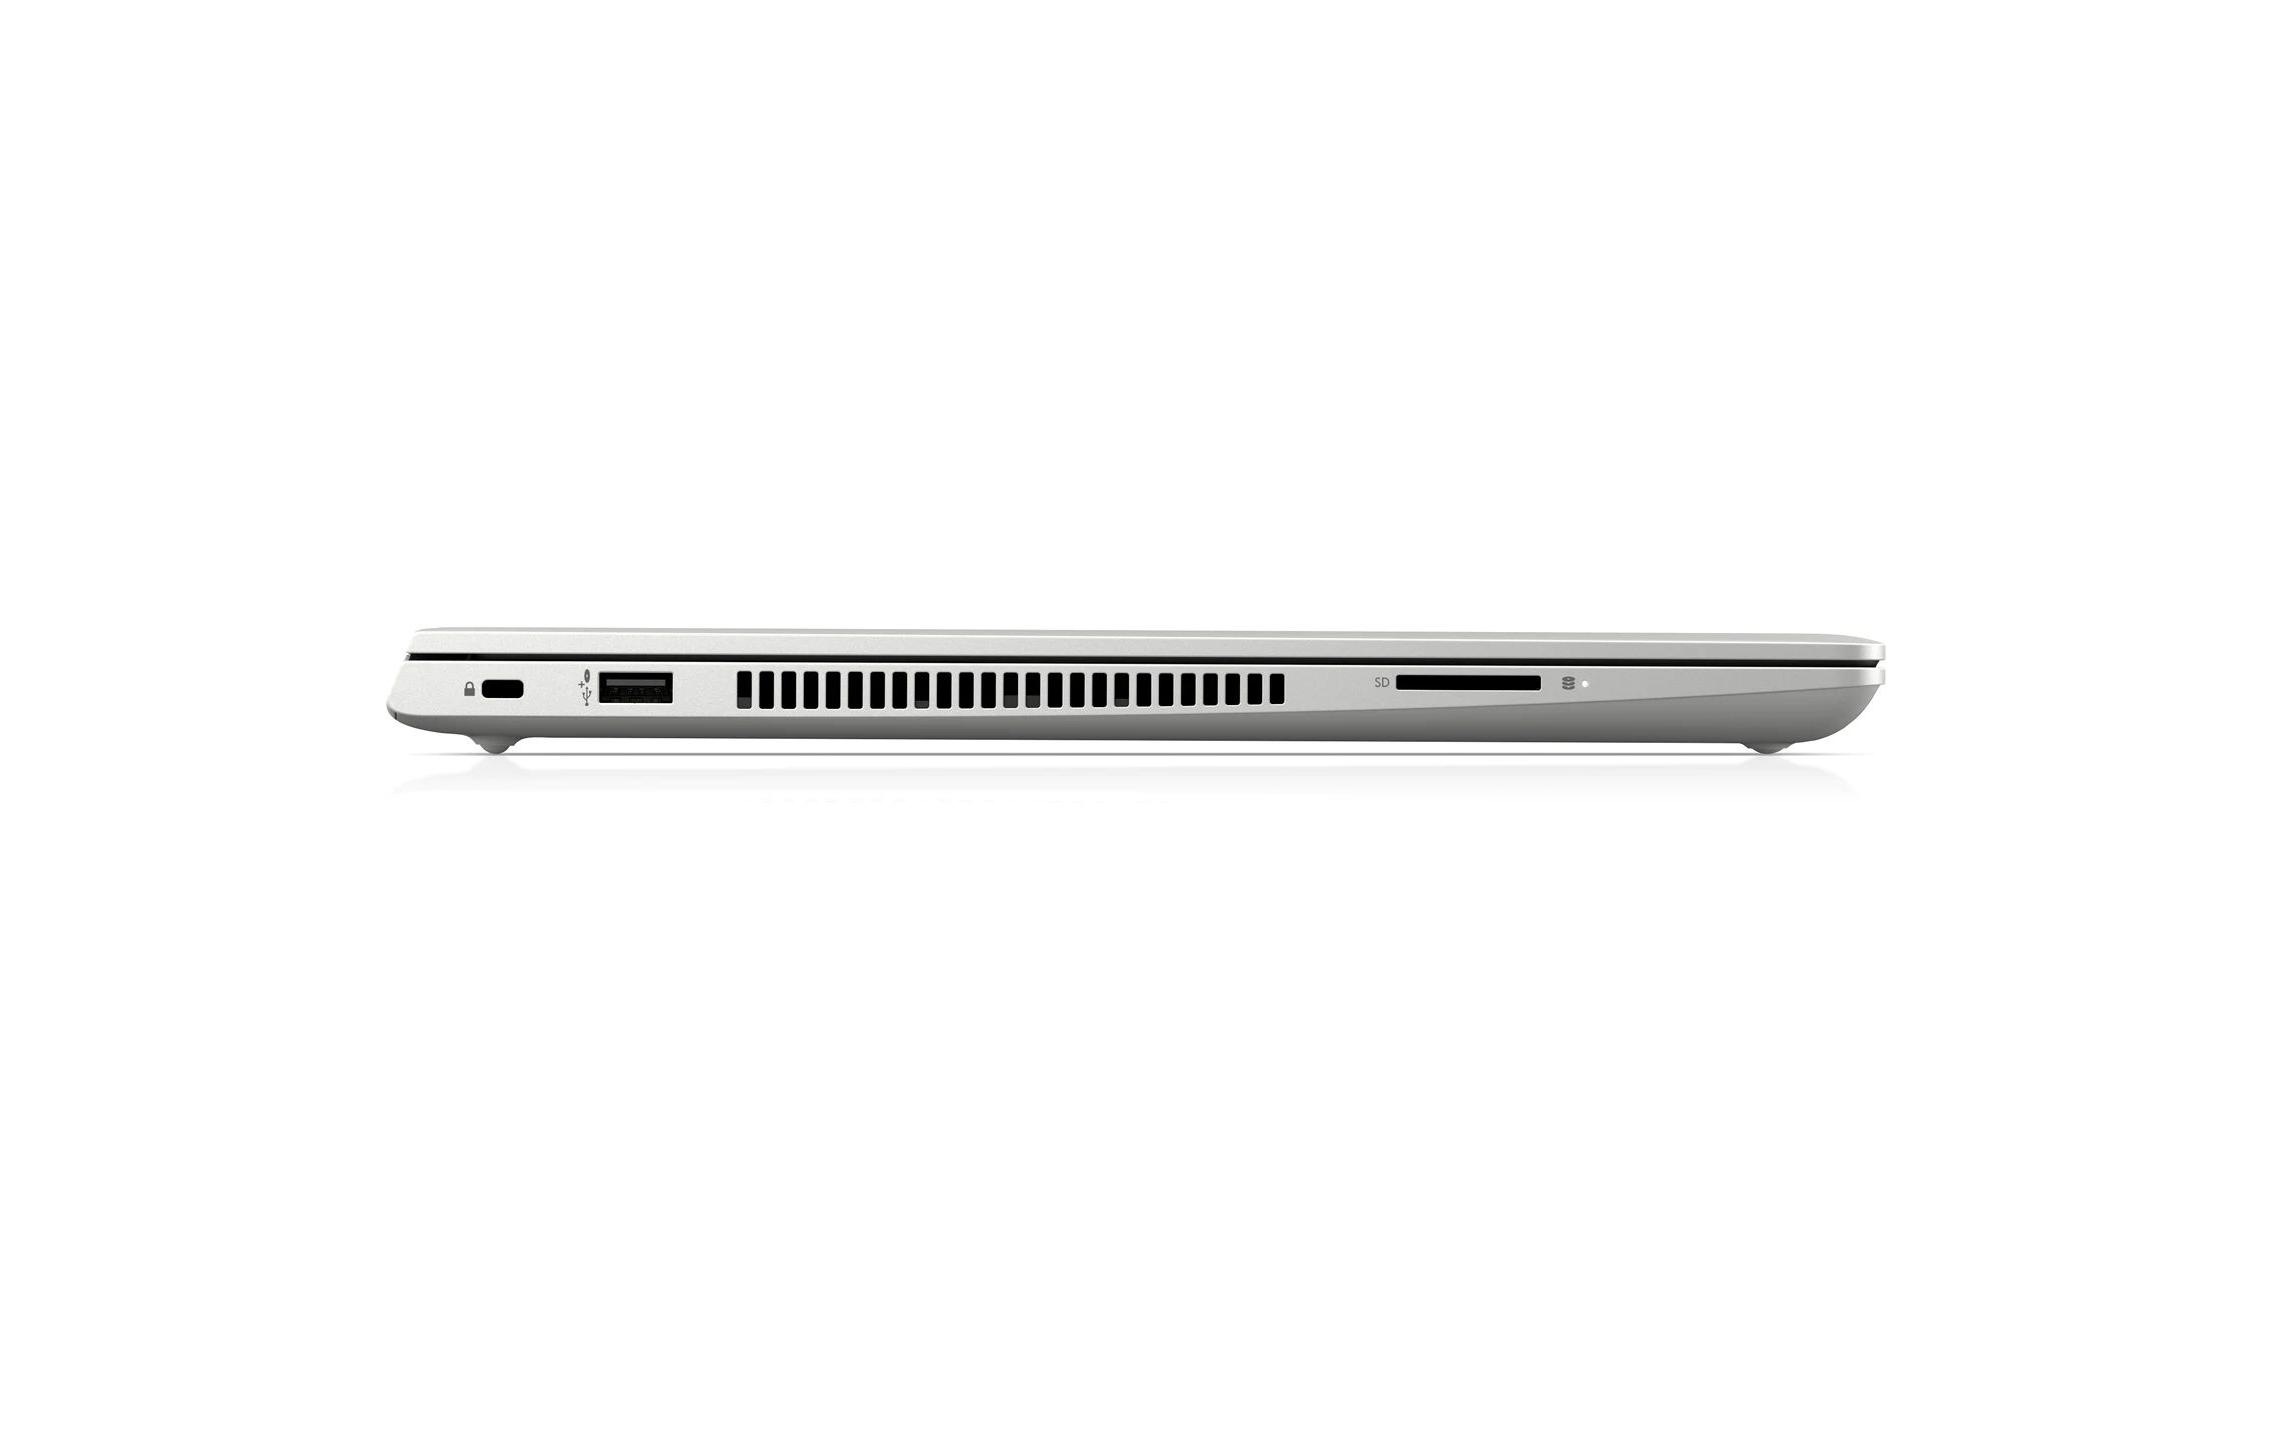 HP Notebook »ProBook 450 G7 9HP84EA«, / 15,6 Zoll, Intel, Core i7, 512 GB SSD